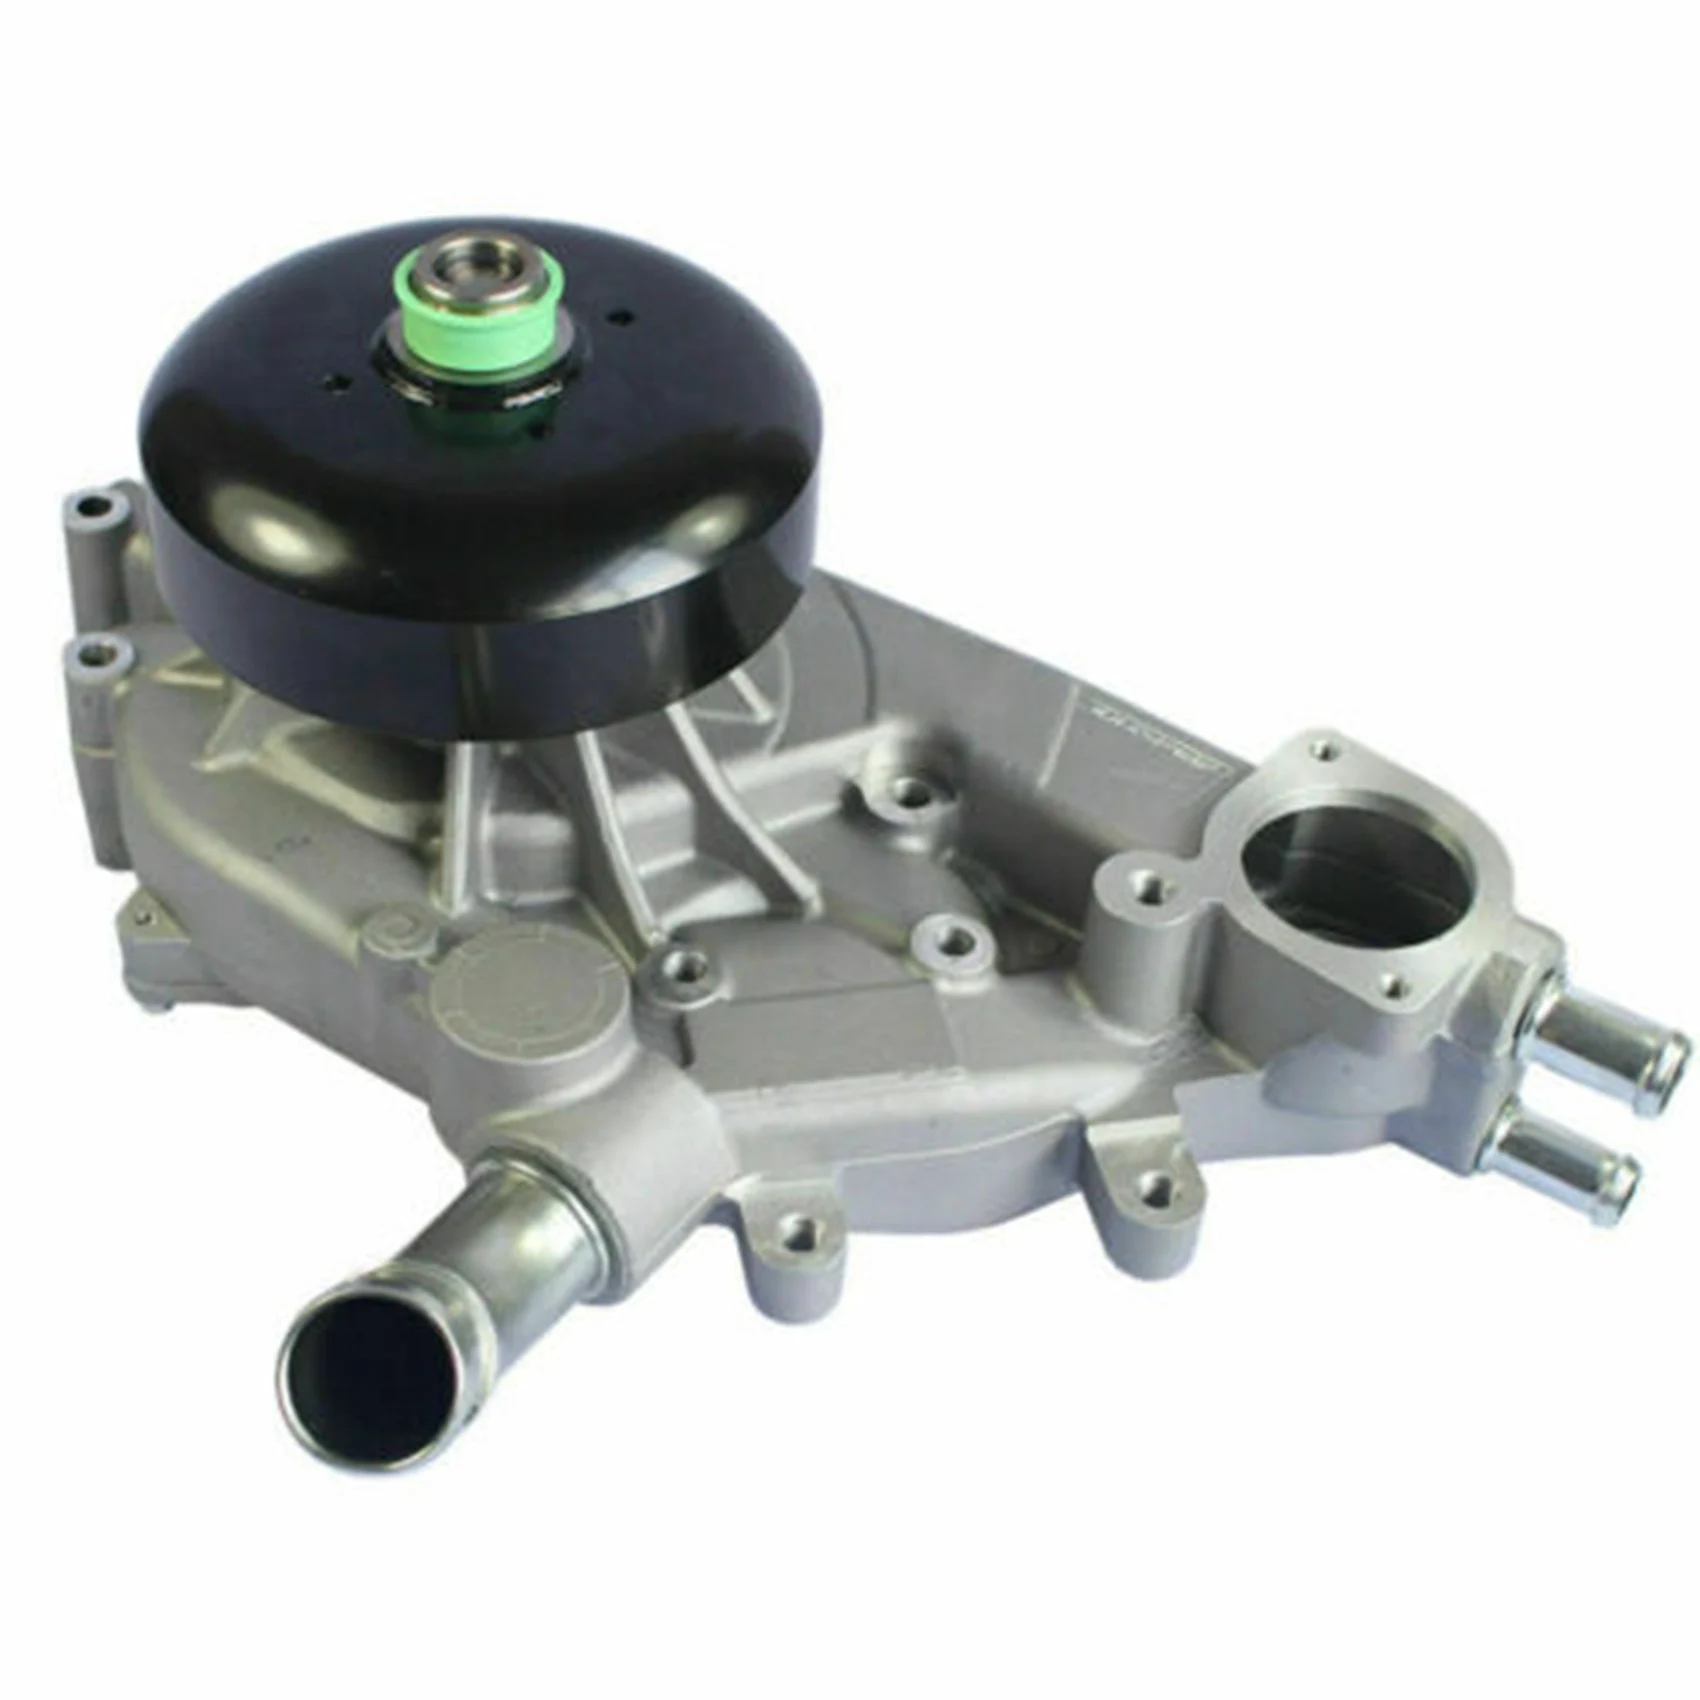 

Water Pump for GMC Chevrolet Silverado 2500 Hd 6.0L V8 6.0 4WD 88894290 12456113 AW5087